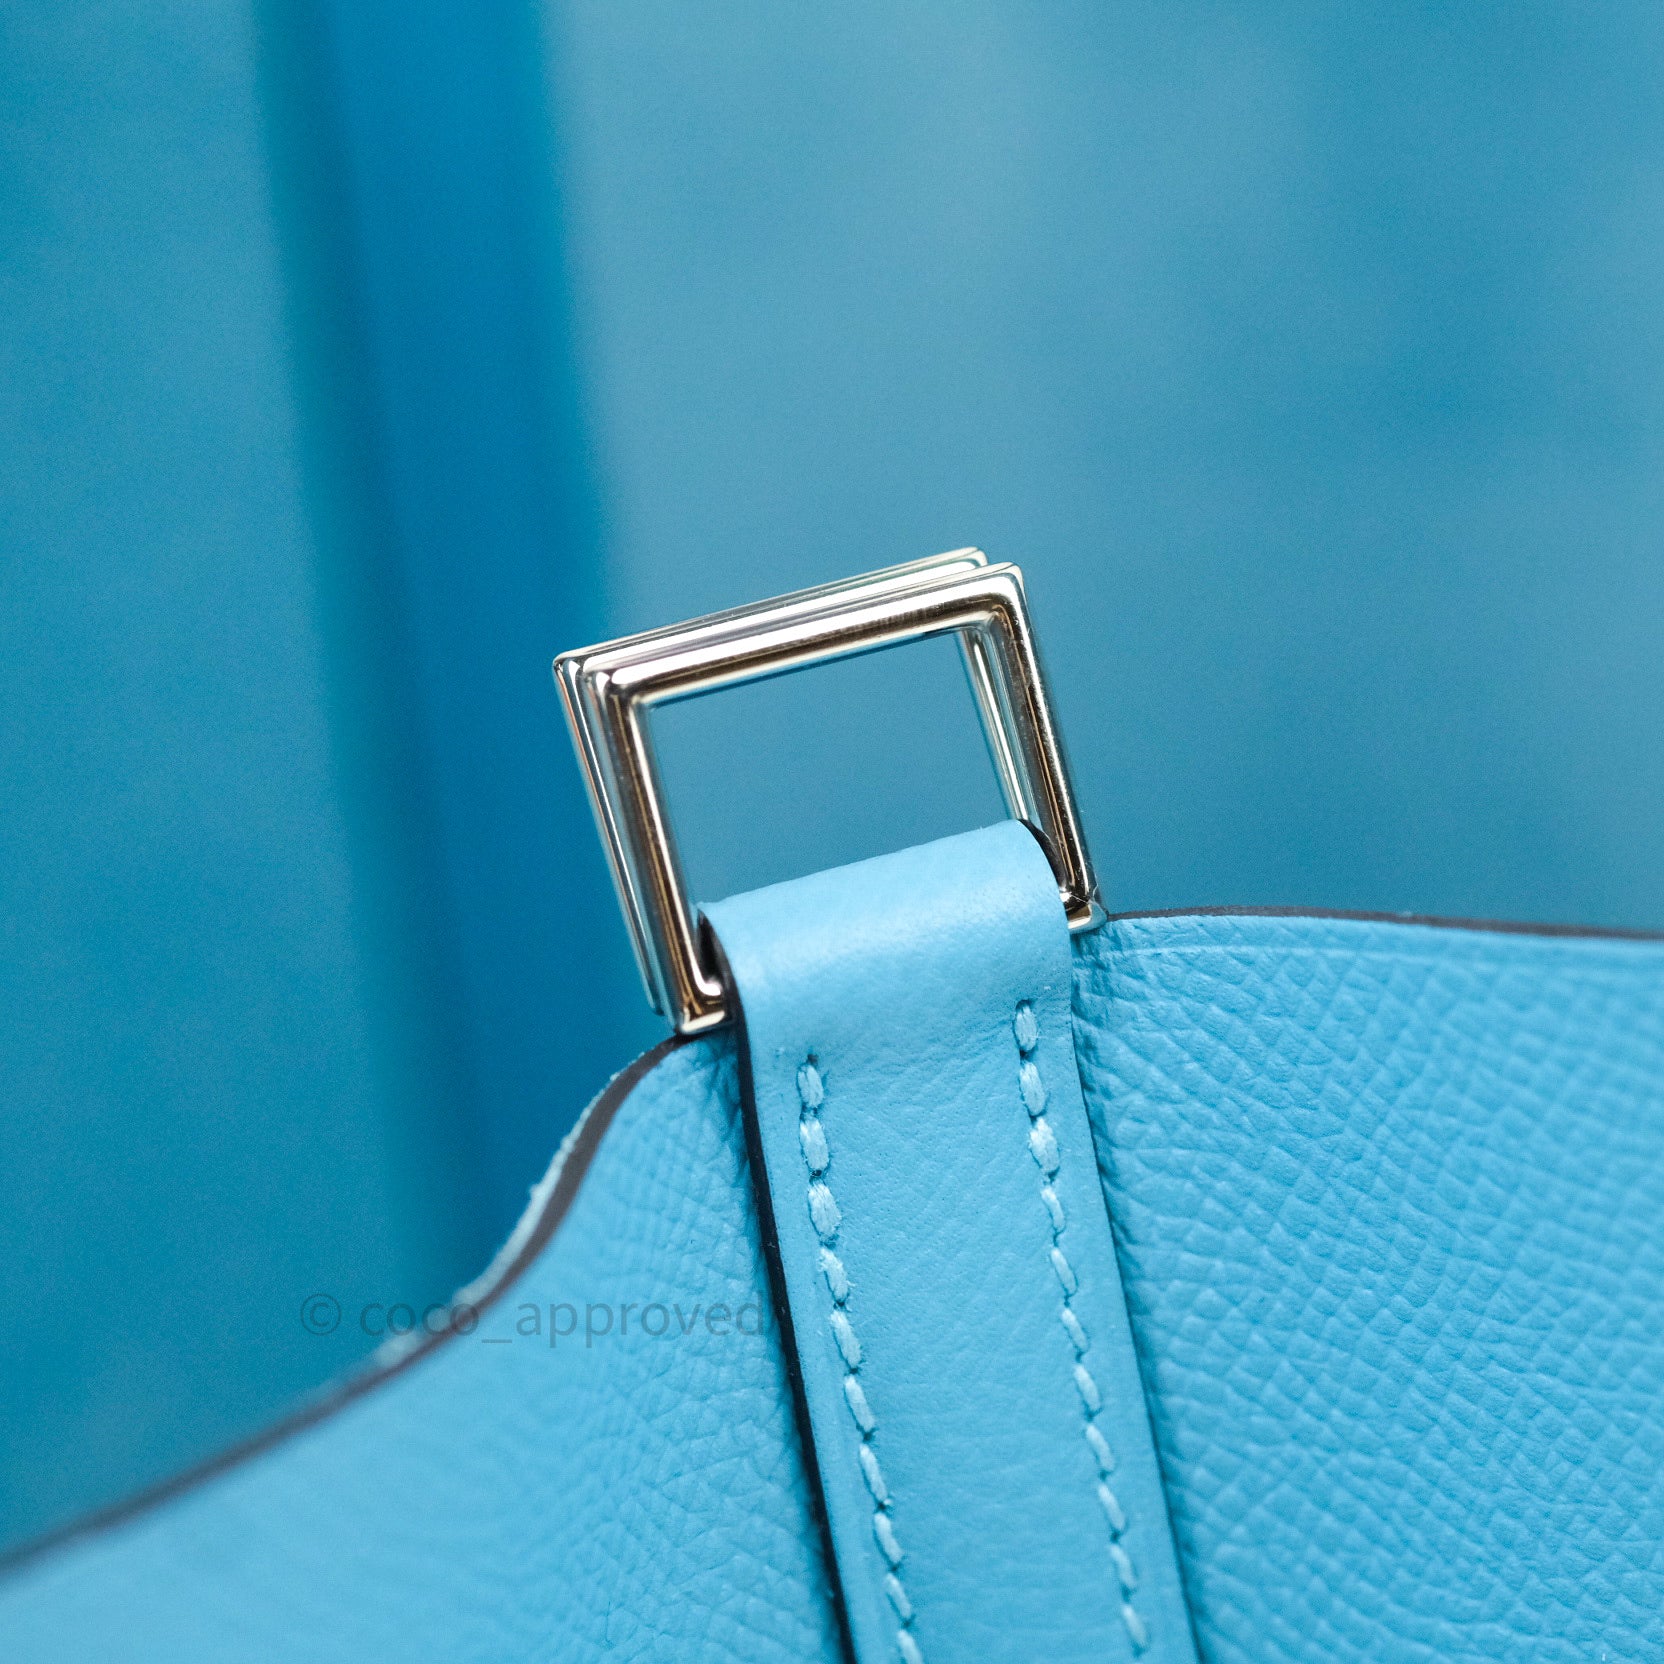 Hermès Picotin 22 Epsom Tressage Blue Du Nord Palladium Hardware – Coco  Approved Studio